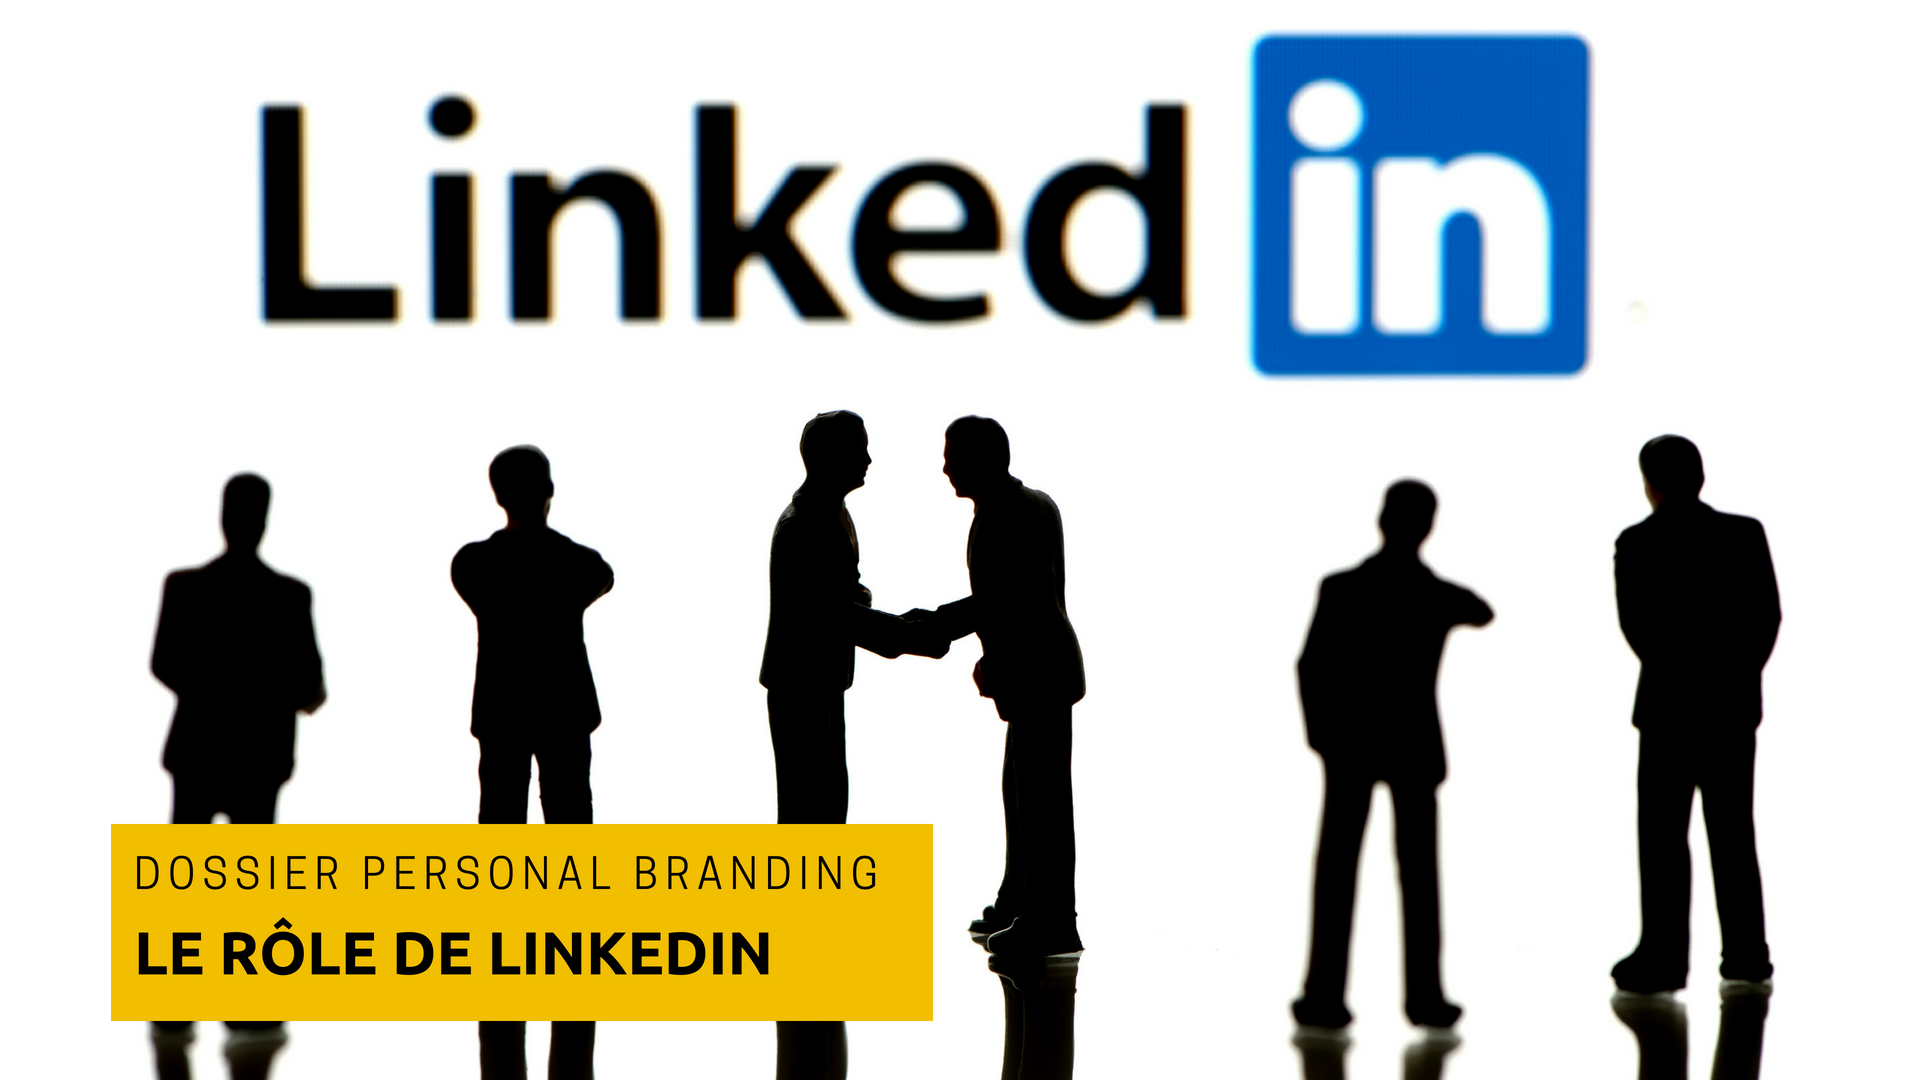 Dossier Personal Branding: Tout savoir sur LinkedIn